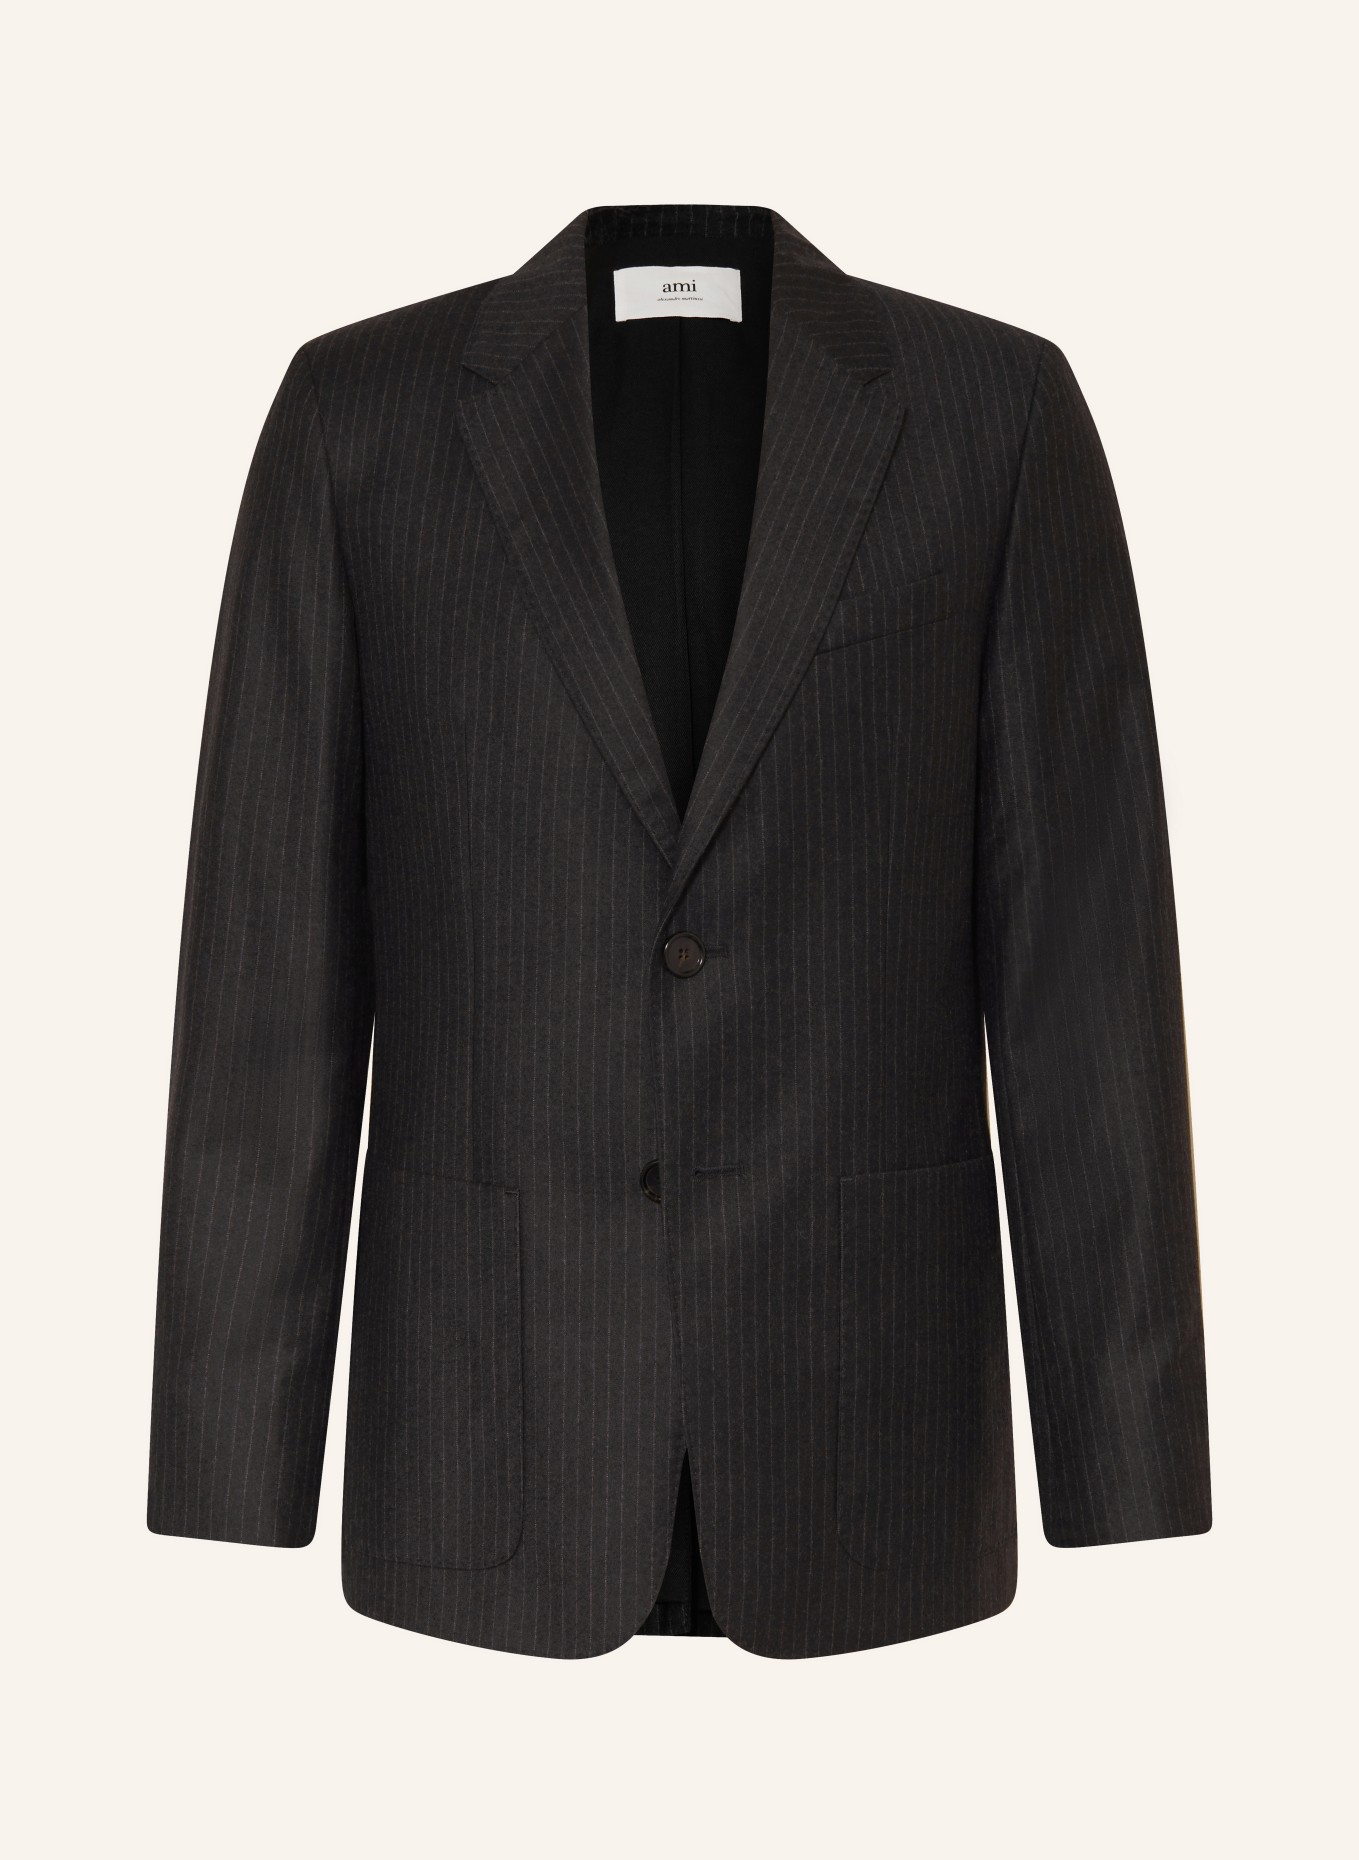 AMI PARIS Suit jacket regular fit, Color: DARK GRAY/ GRAY (Image 1)